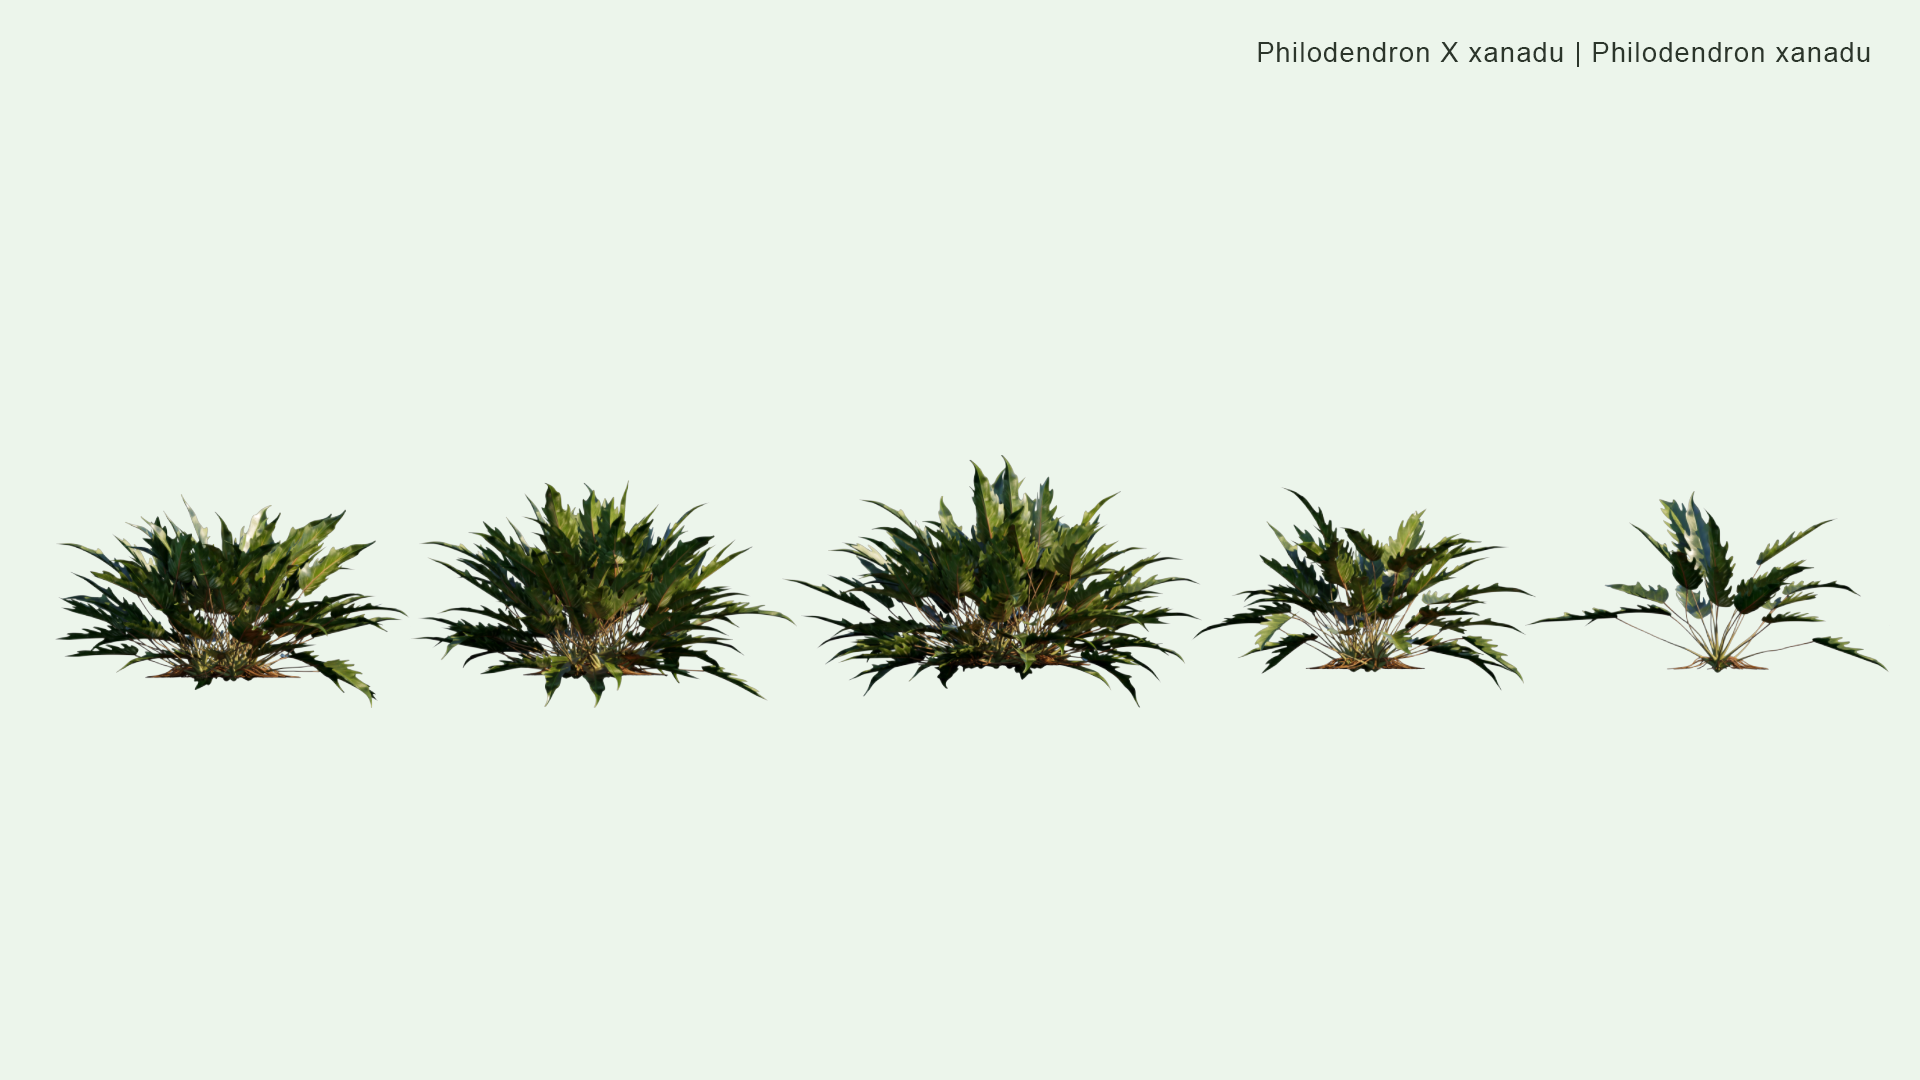 2D Philodendron x Xanadu - Philodendron Xanadu